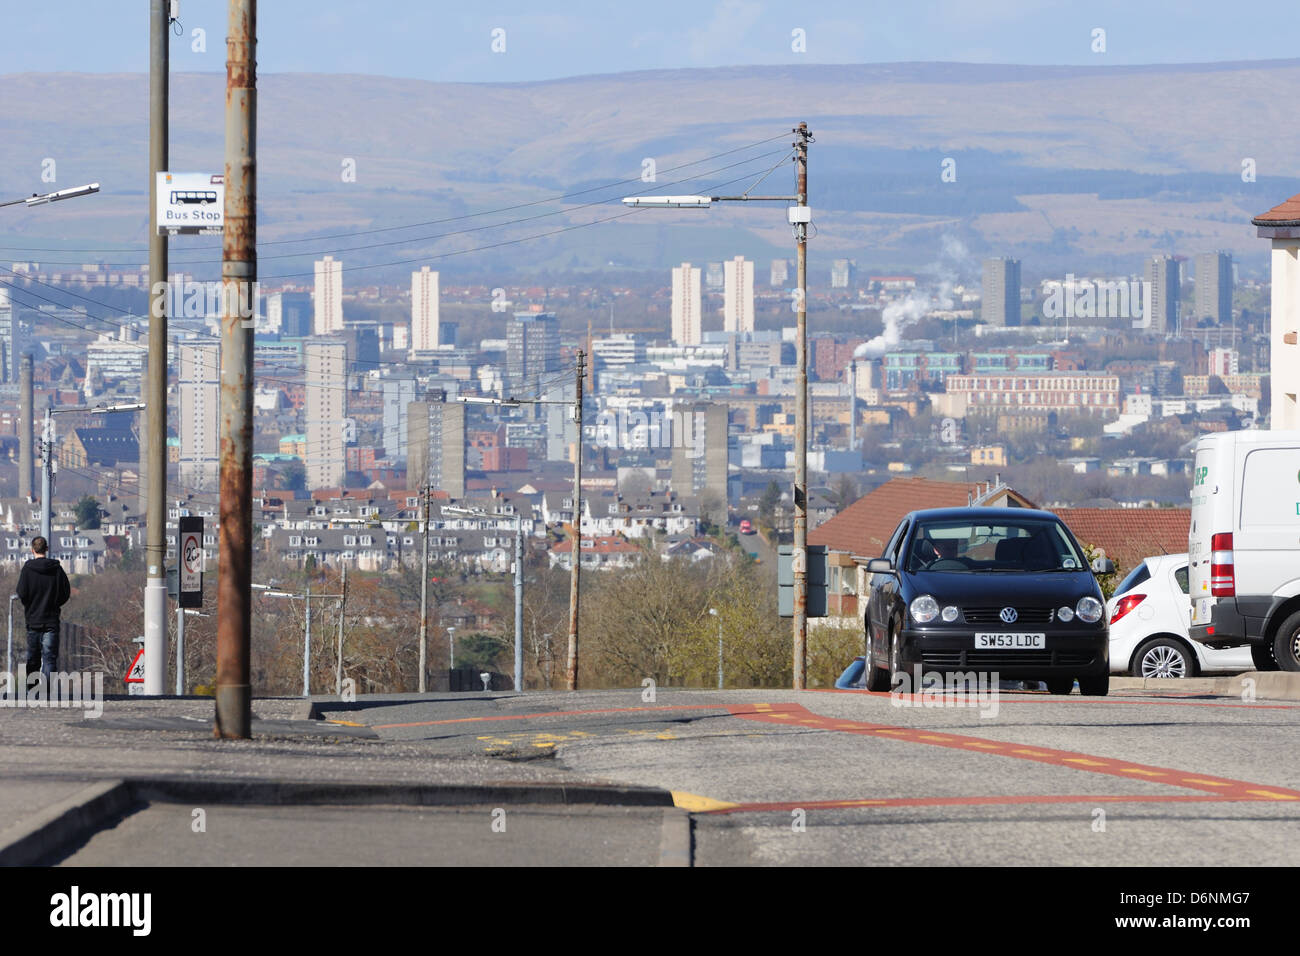 View over the city of Glasgow from Castlemilk housing scheme, Scotland, UK Stock Photo